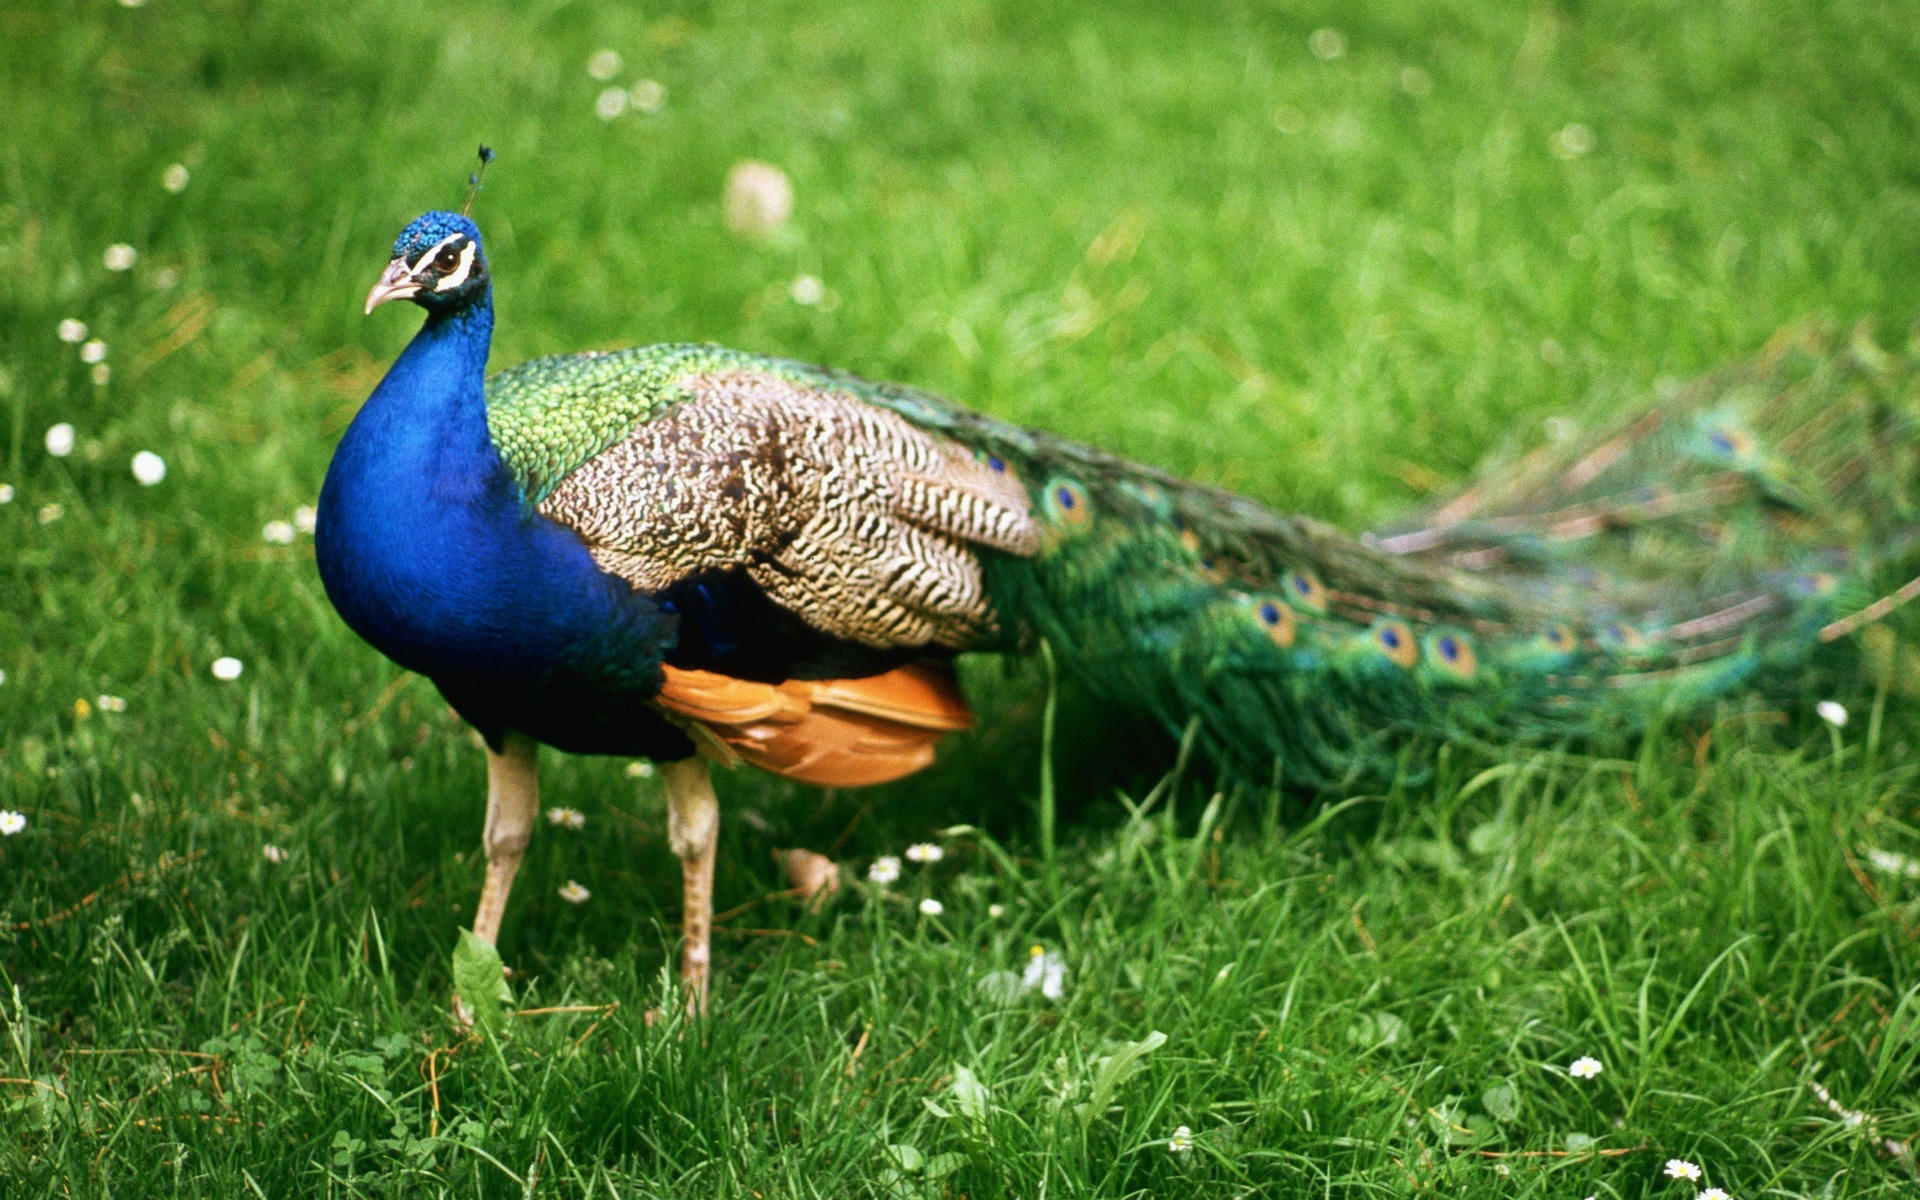 Most Nature Wallpaper Beautiful Peacock In